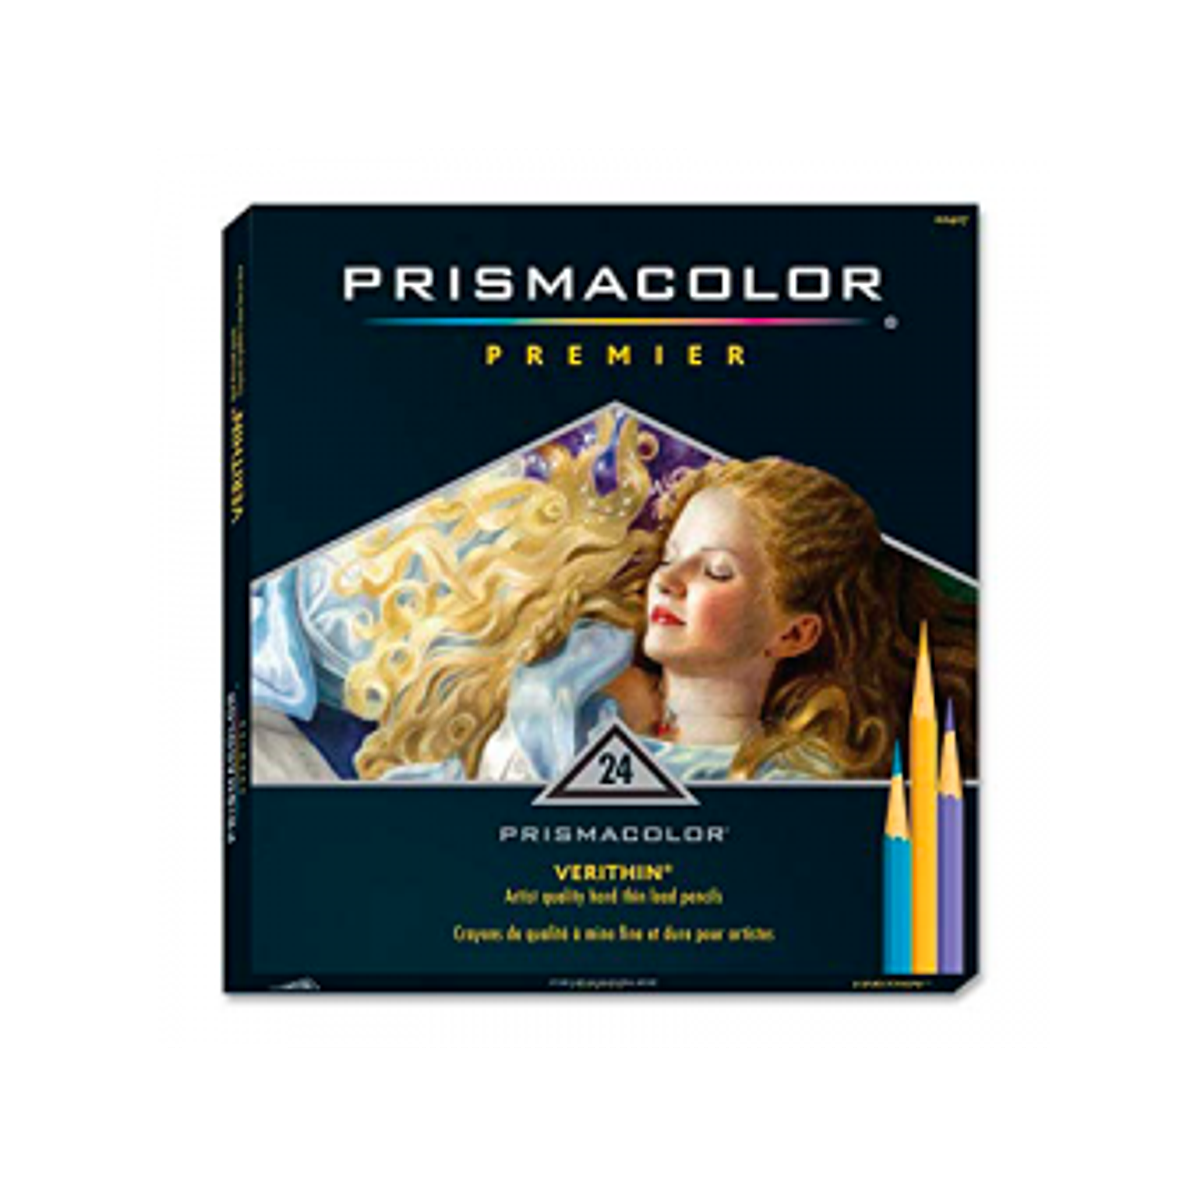 Lápices de Colores Prismacolor Borrables Col-Erase 24 Colores